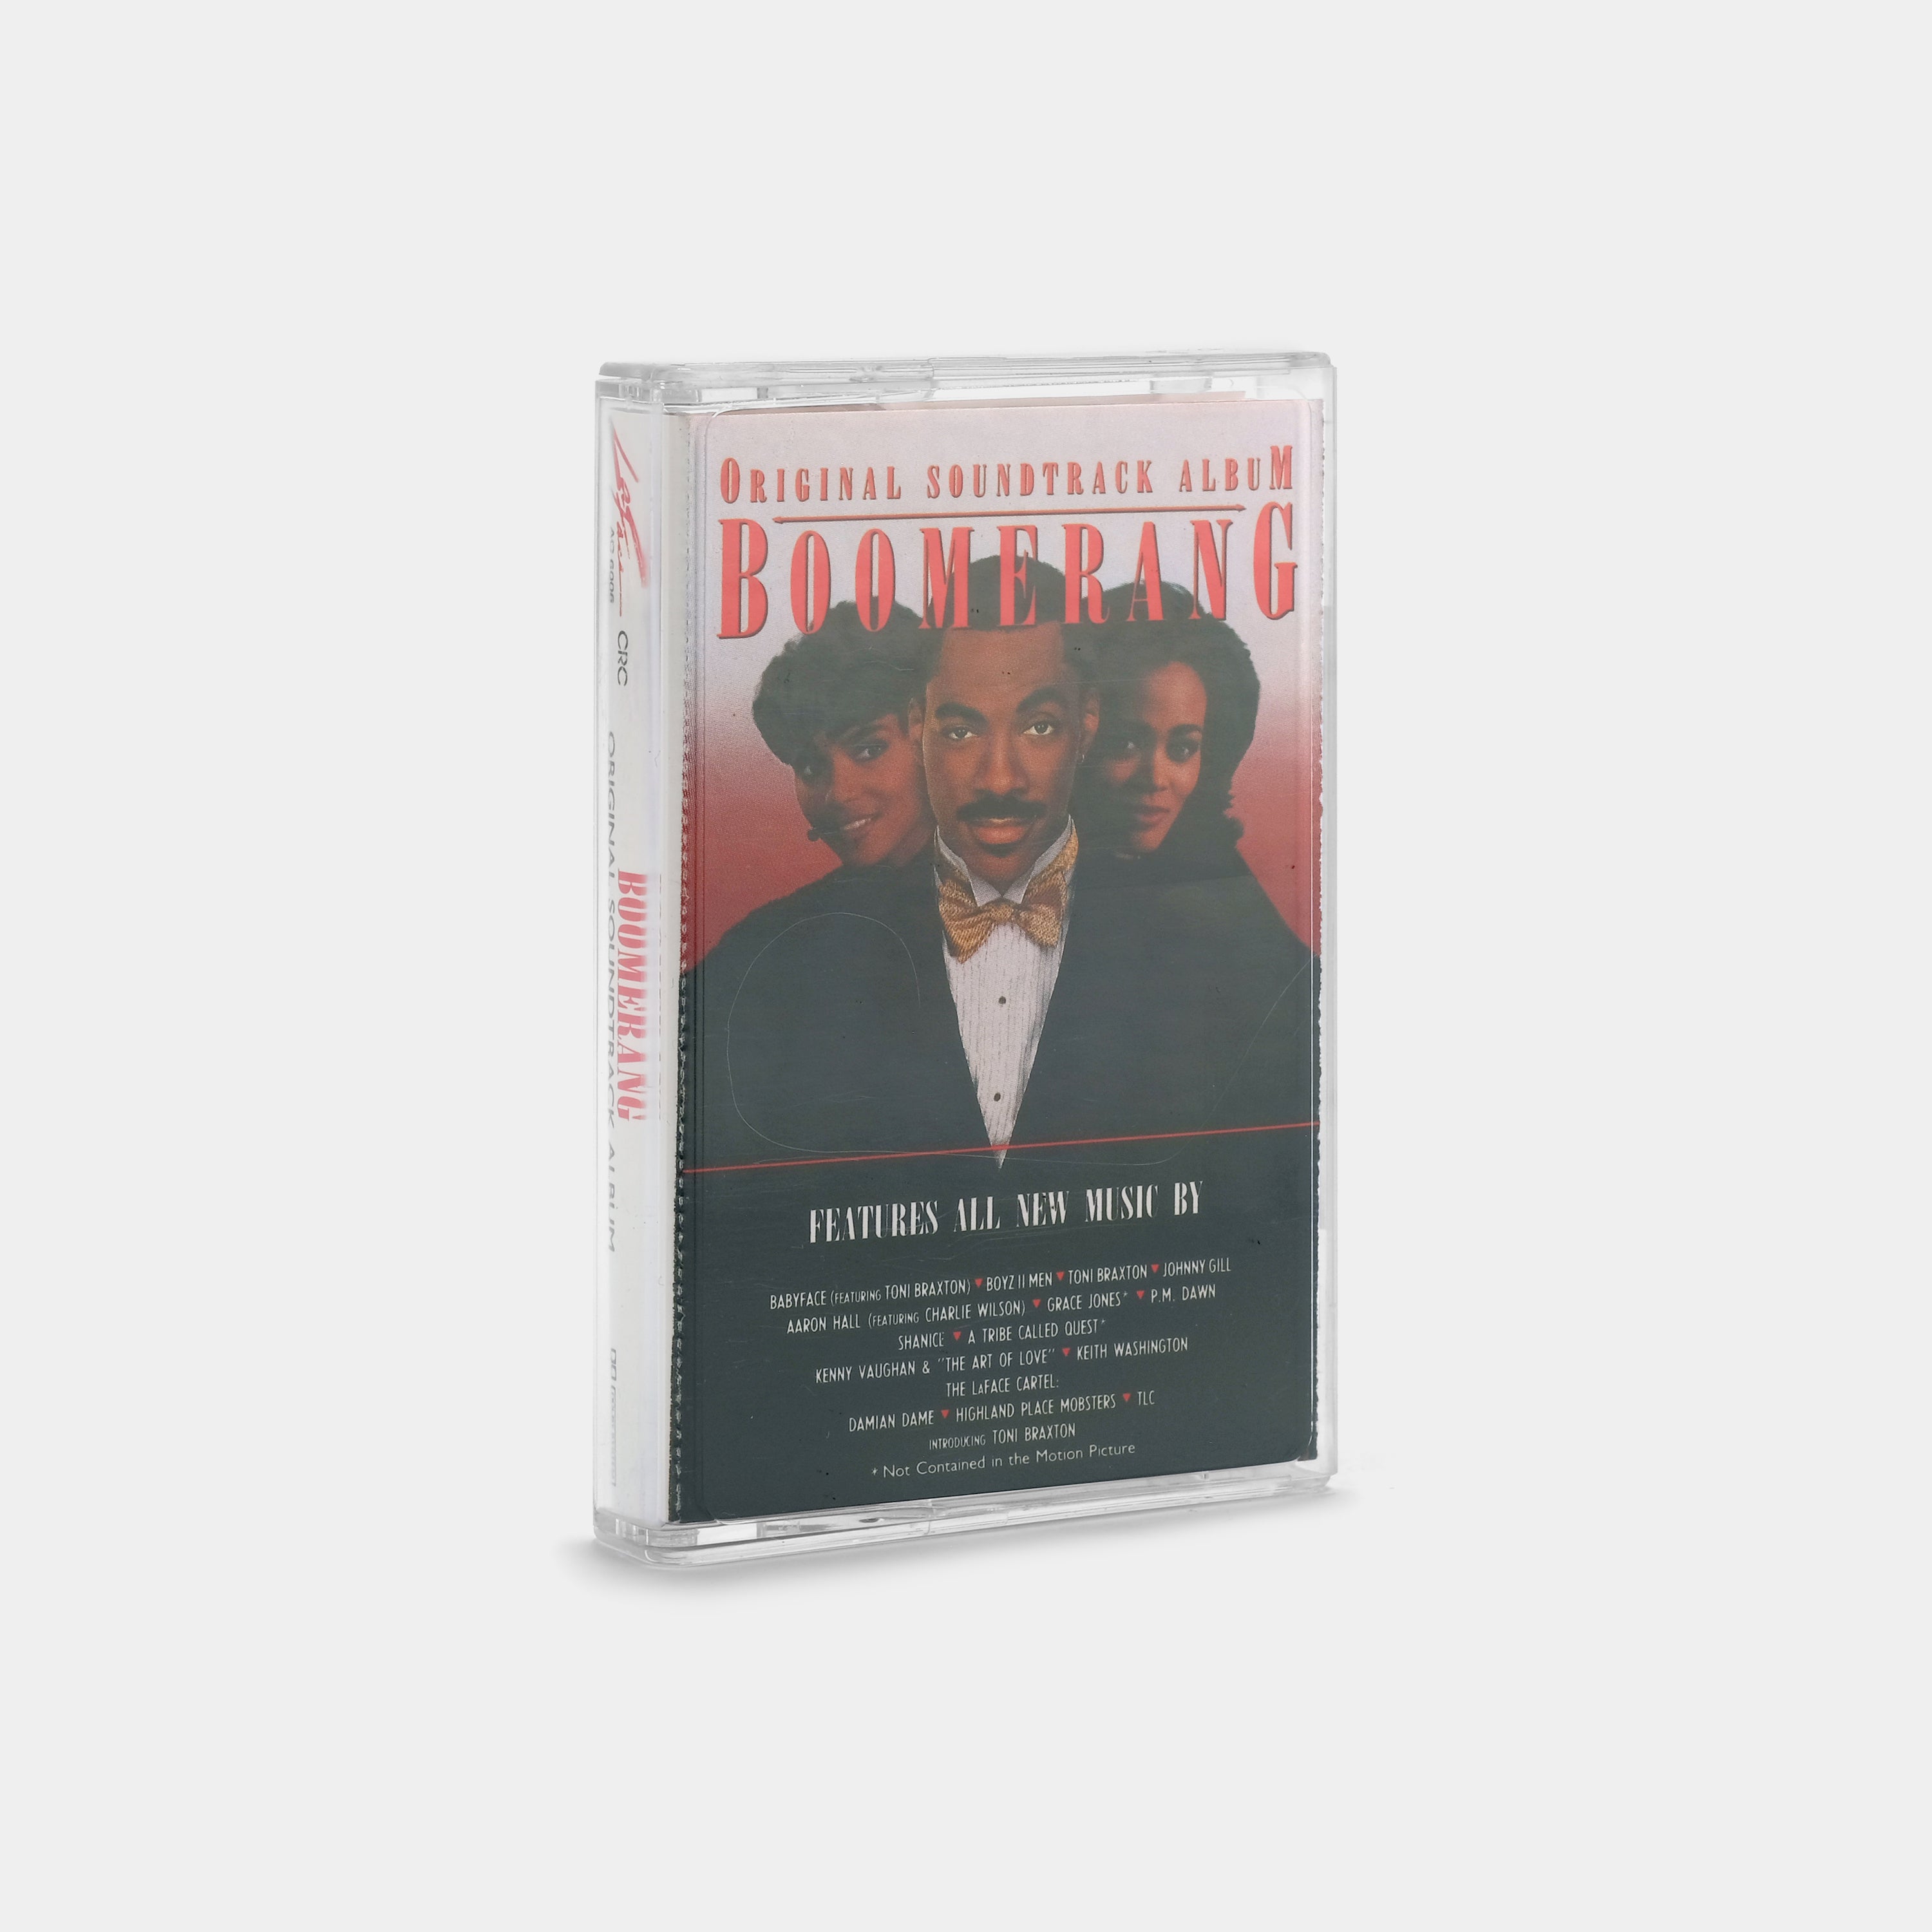 Boomerang (Original Motion Picture Soundtrack Album) Cassette Tape